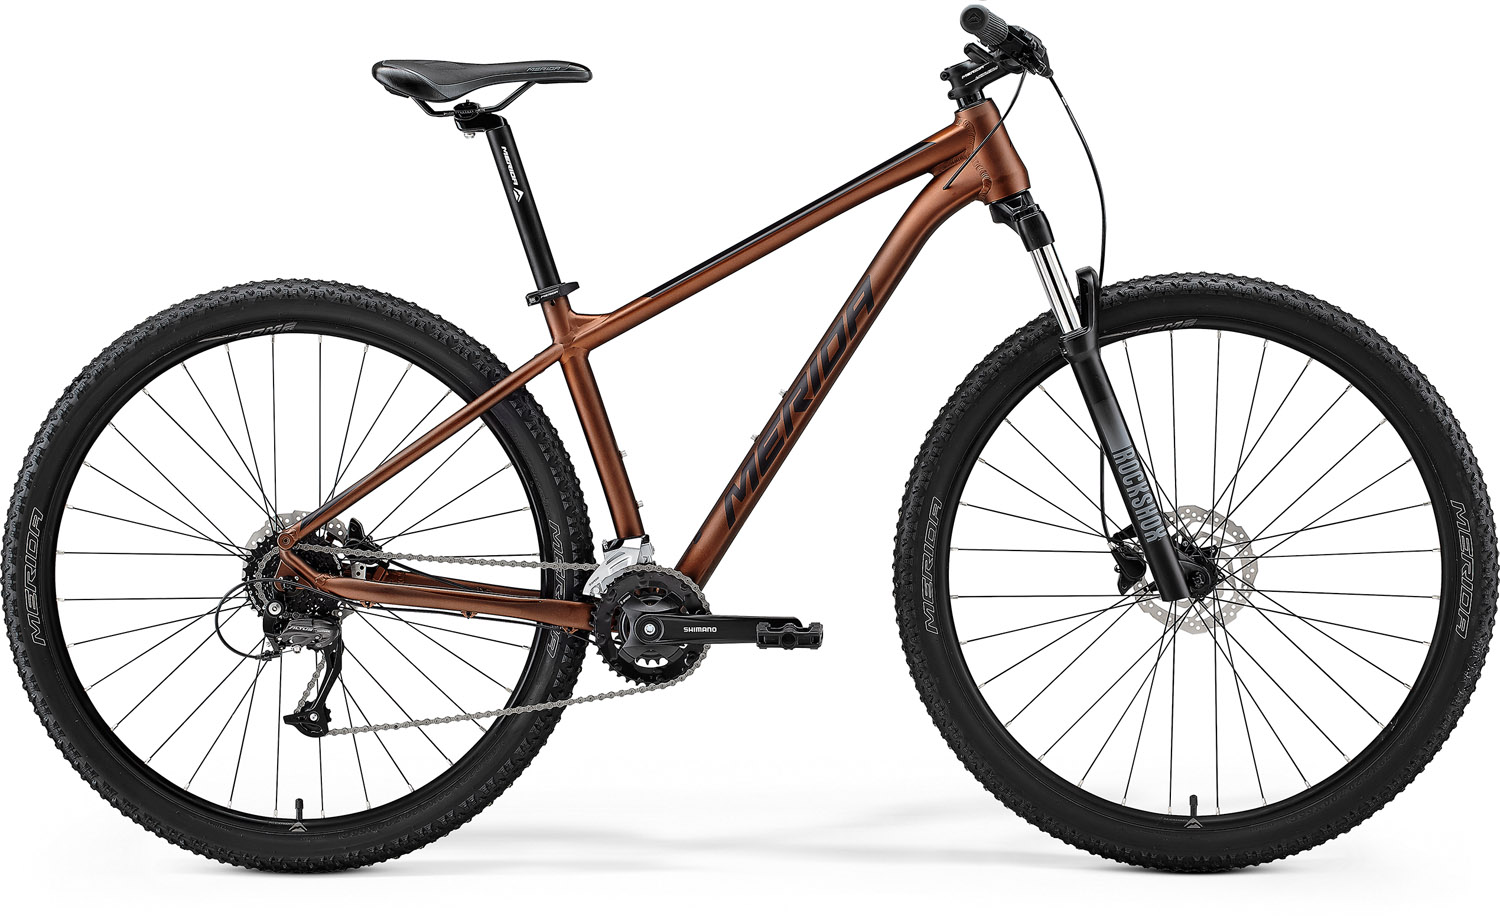 Bicicleta MTB Unisex Merida Big.Nine 60-2X Bronz/Negru 22/23